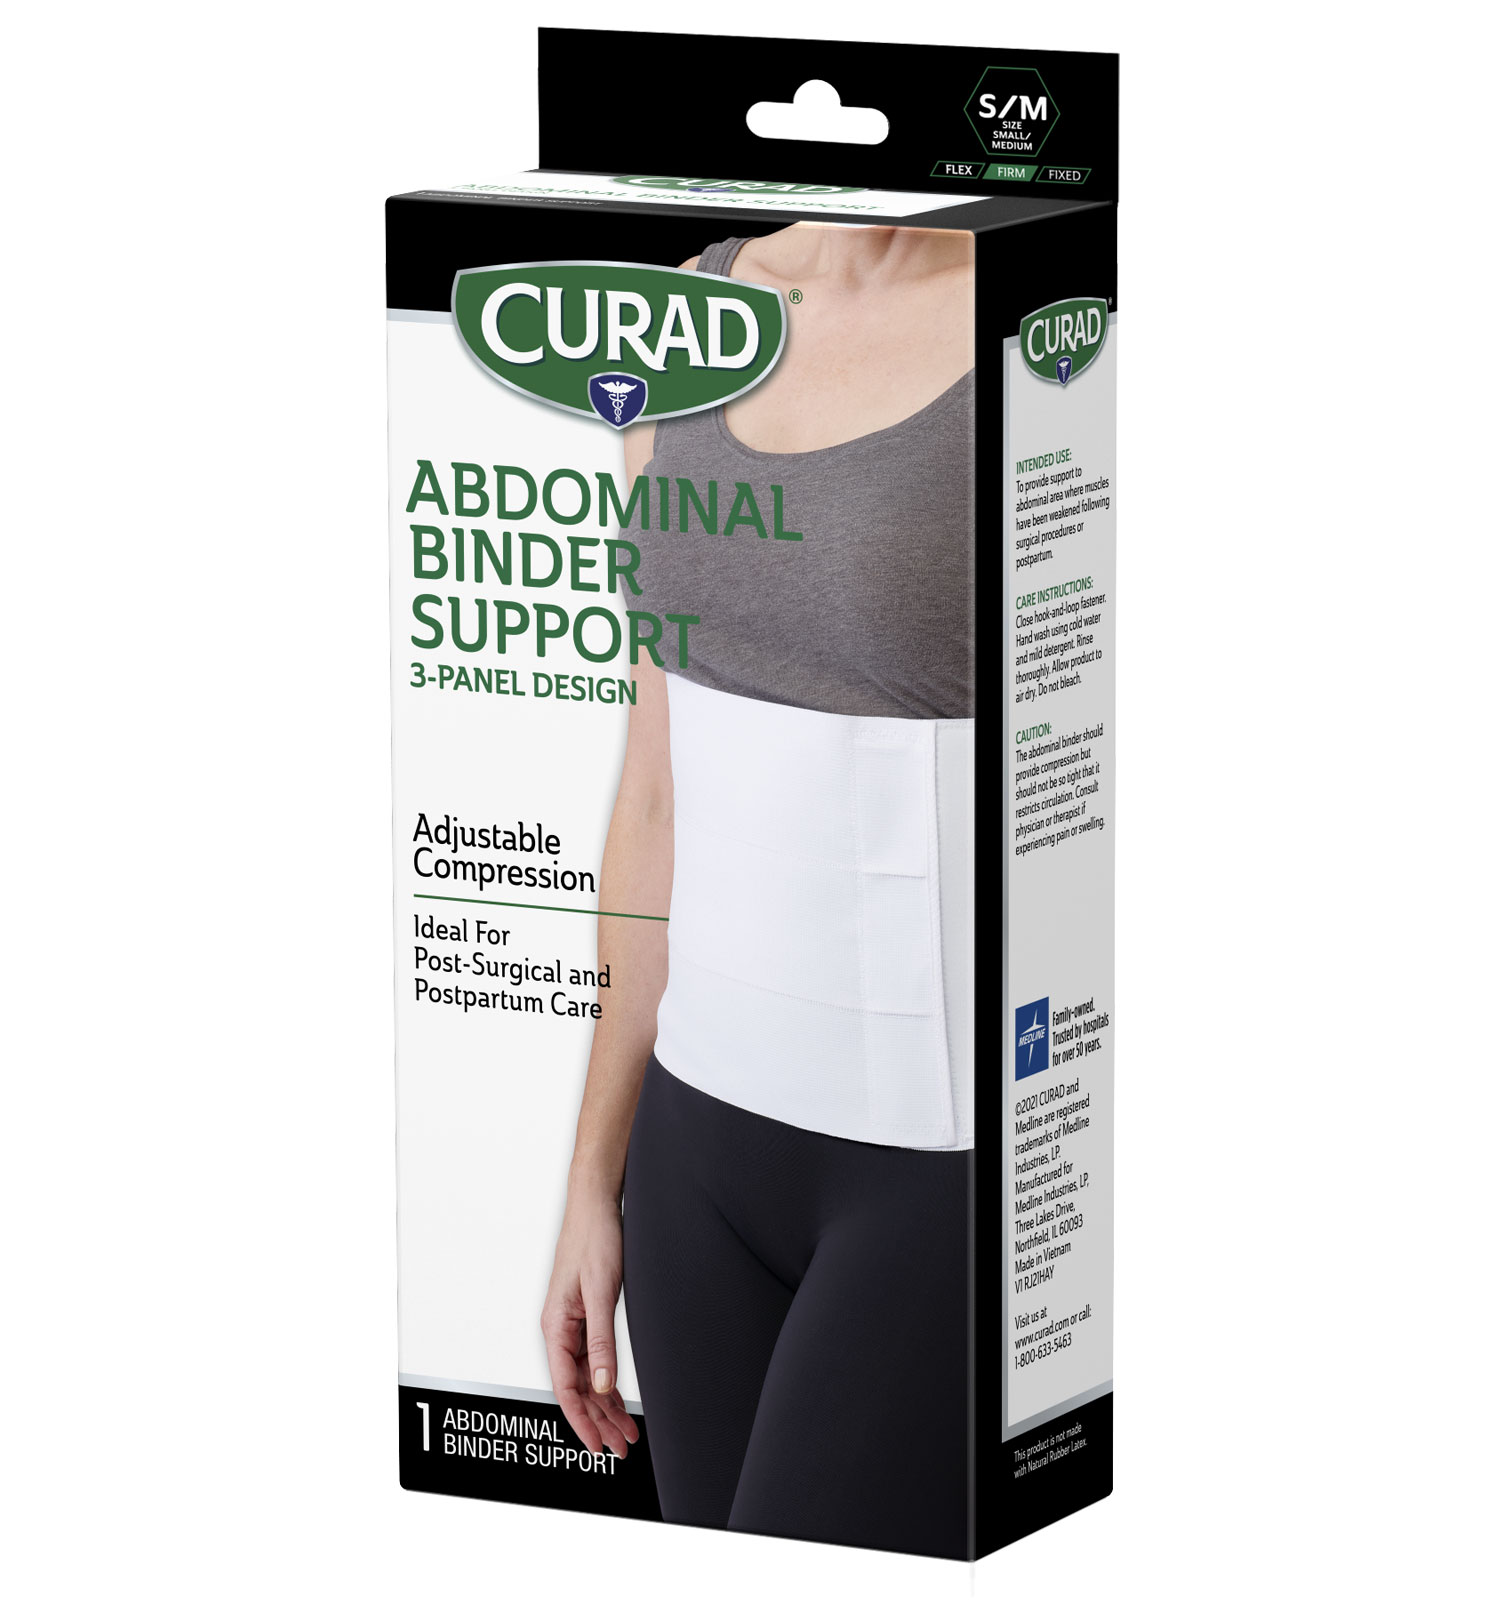 CURAD Abdominal Binder Support, 3-Panel Design, Small/Medium, 1